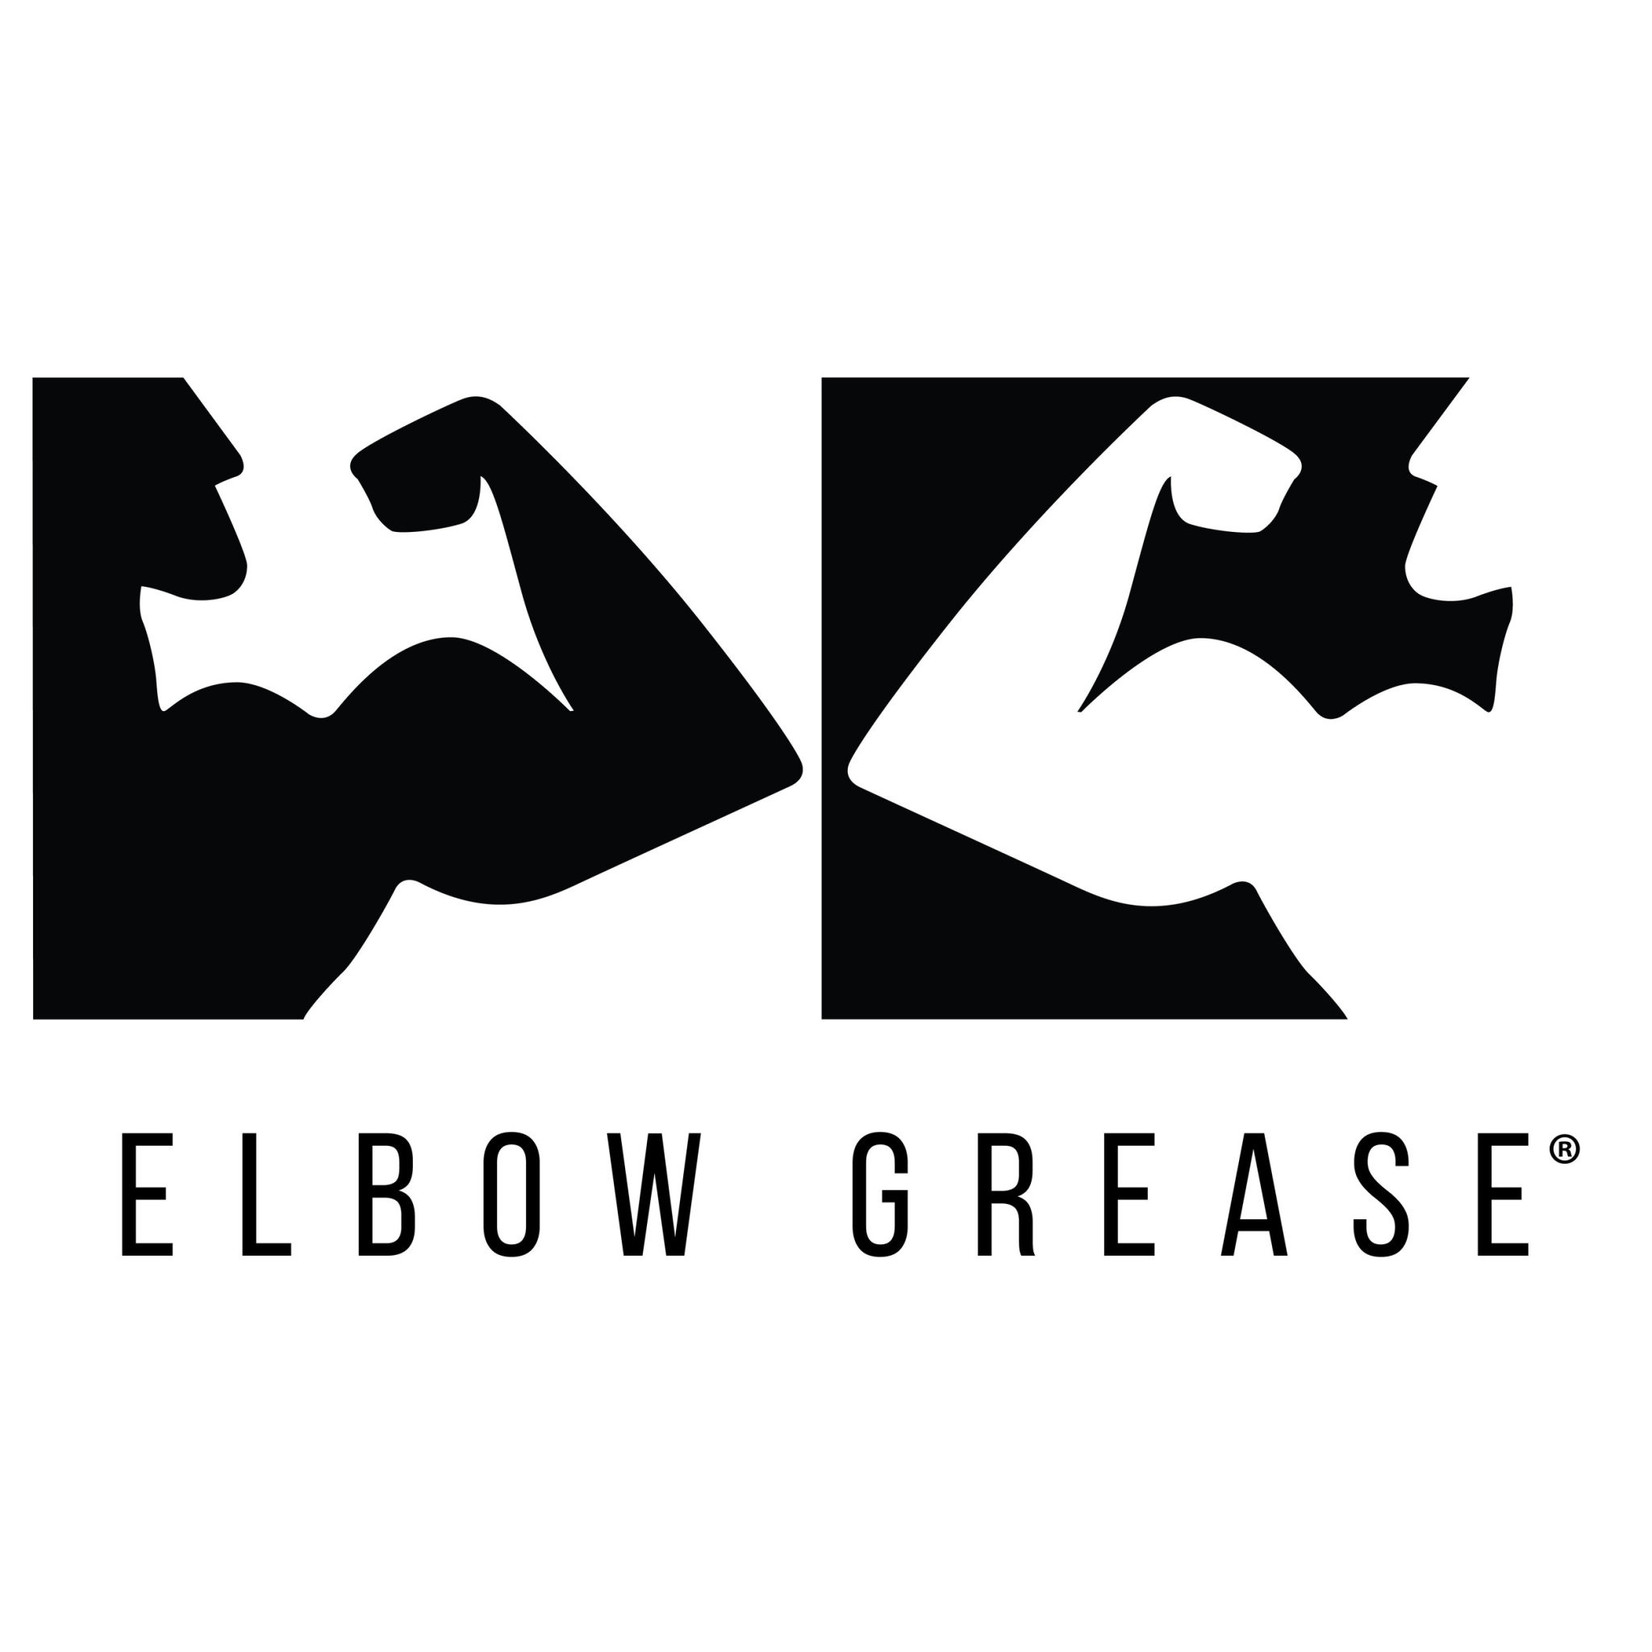 Elbow Grease Elbow Grease Cream